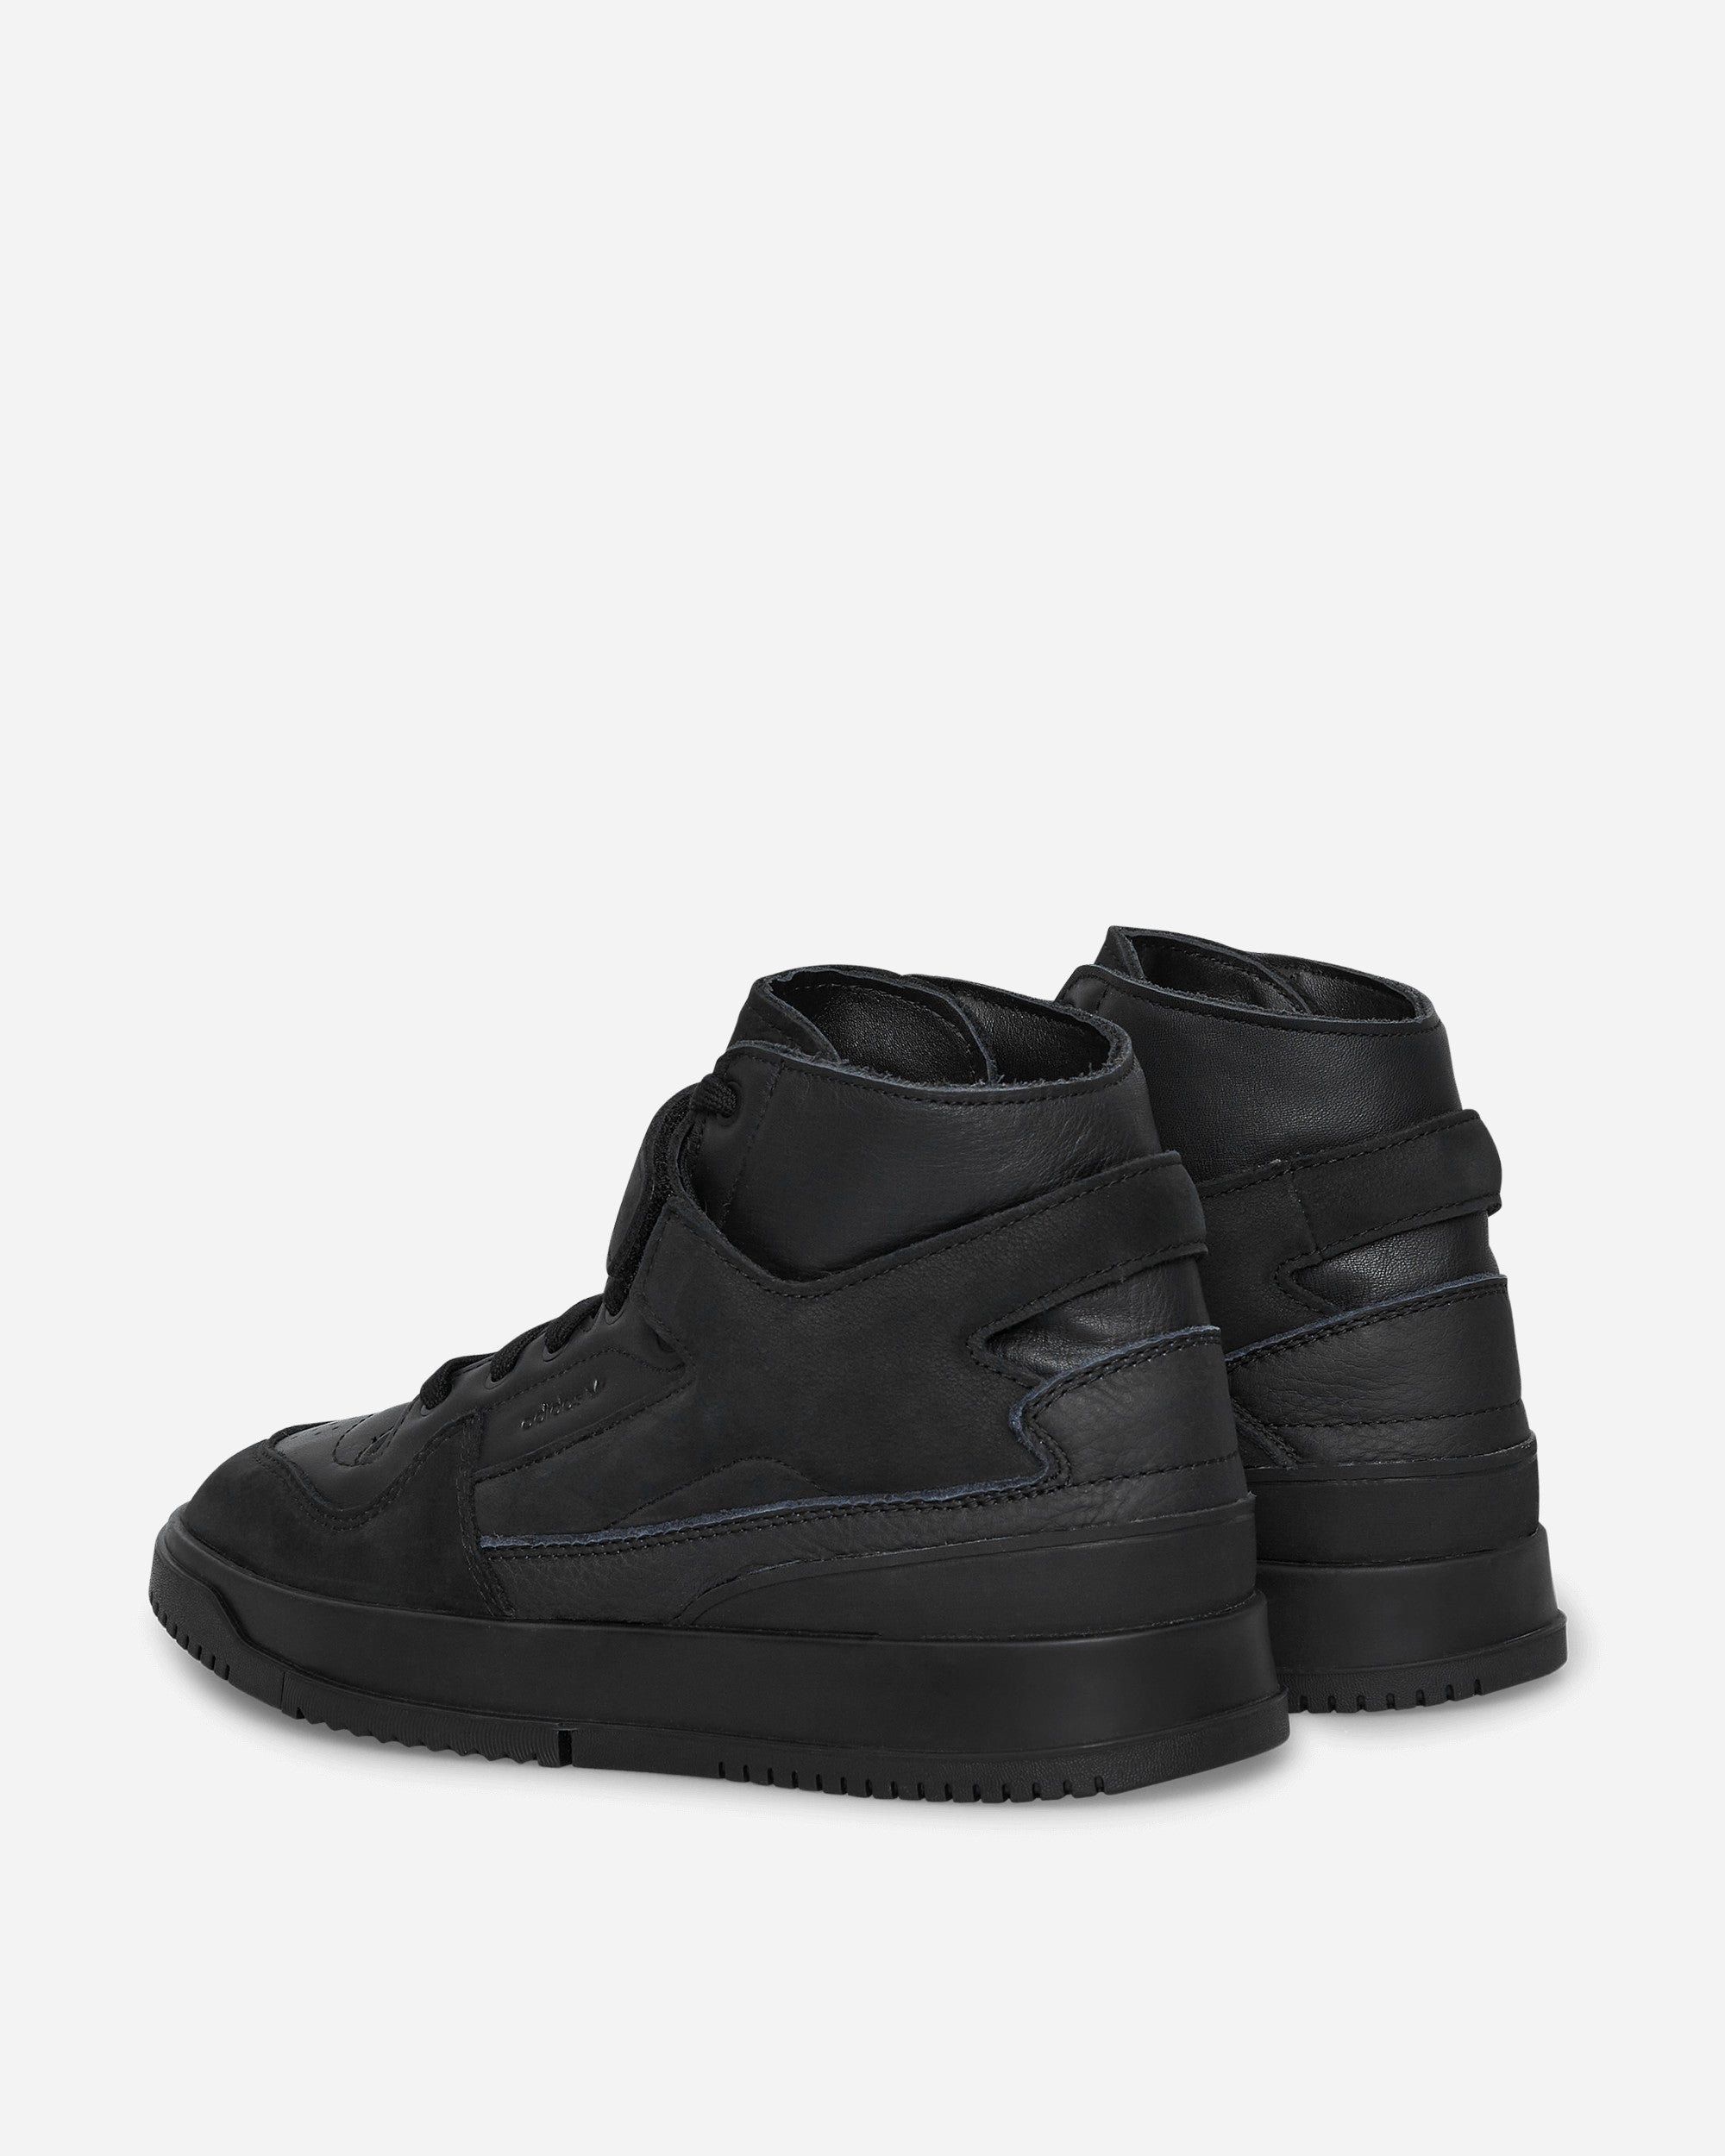 adidas Originals Forum Premiere Core Black Sneakers Low GY5799